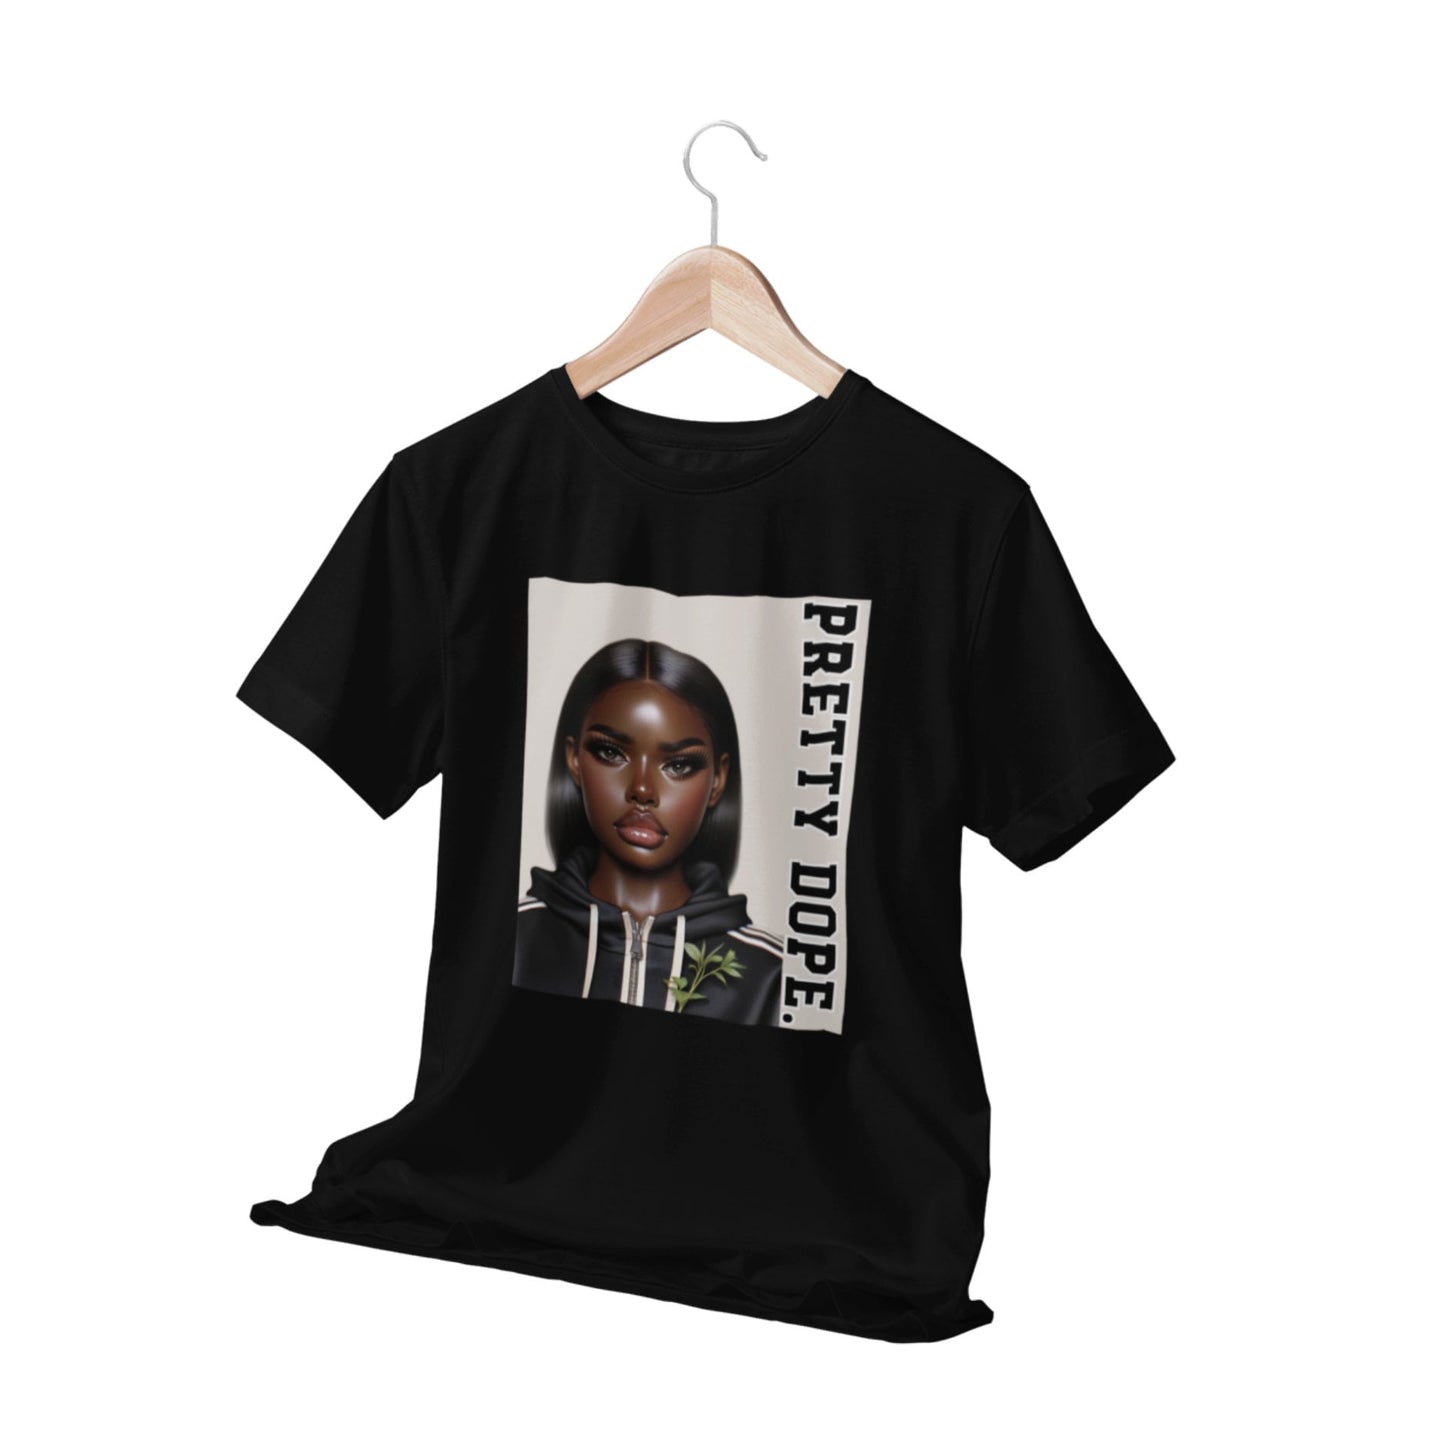 Graphic Tee | T-shirt| Melanin t-shirt| Black girl shirt | Black woman t-shirt| Kids t-shirt | Pretty shirt | Dope shirt | Urban t shirt|